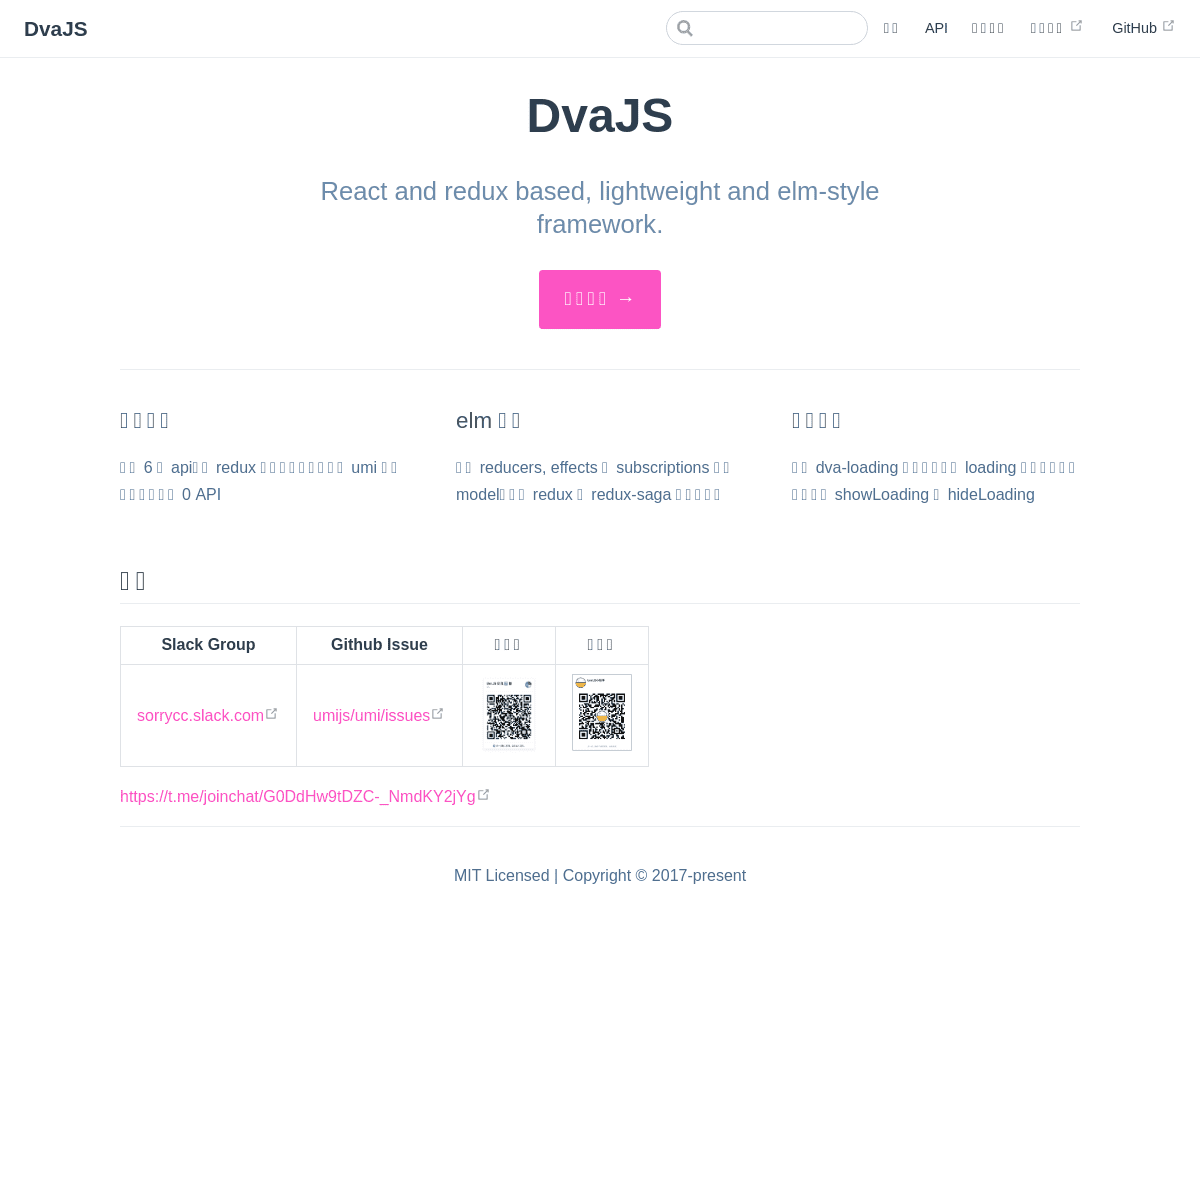 A complete backup of dvajs.com